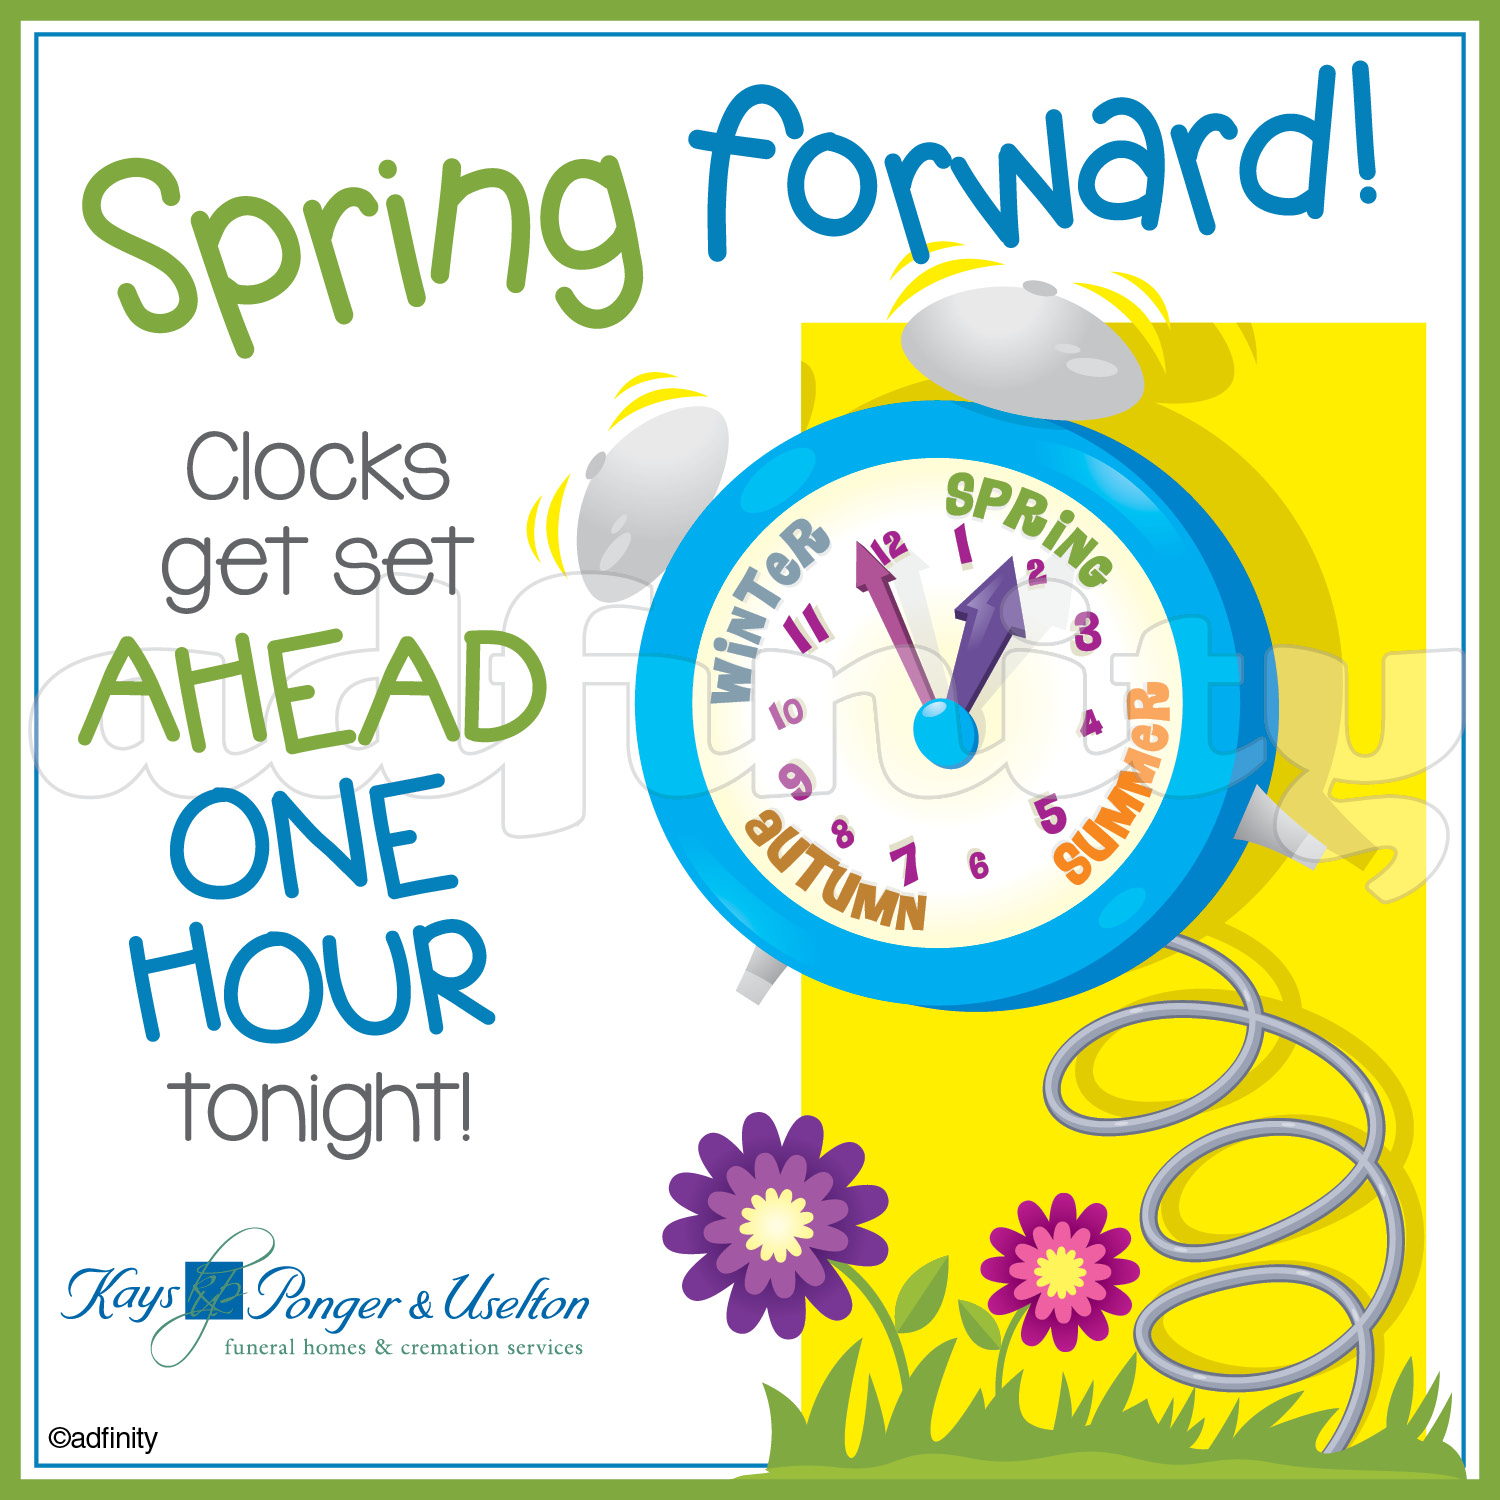 Spring forward! Clocks get set ahead one hour tonight! (Facebook